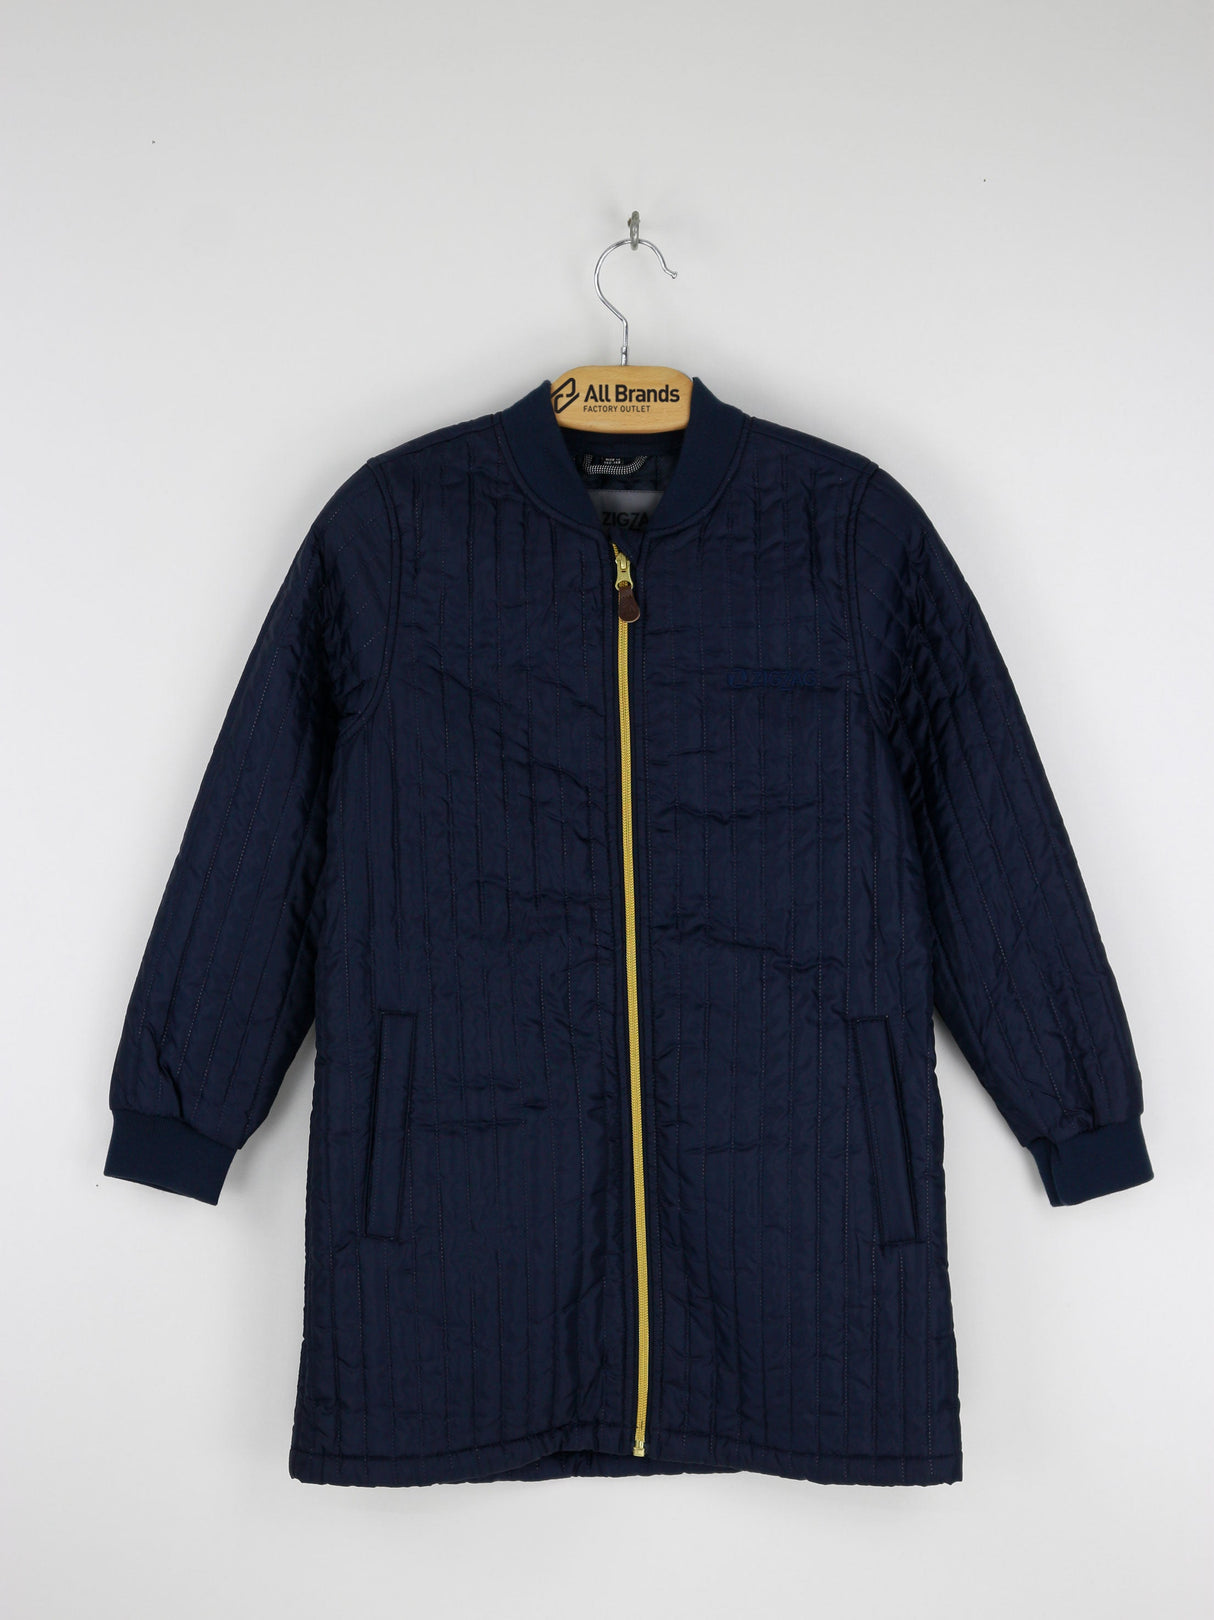 Image for Kids Girl Plain Quilted Coat Jacket,Navy